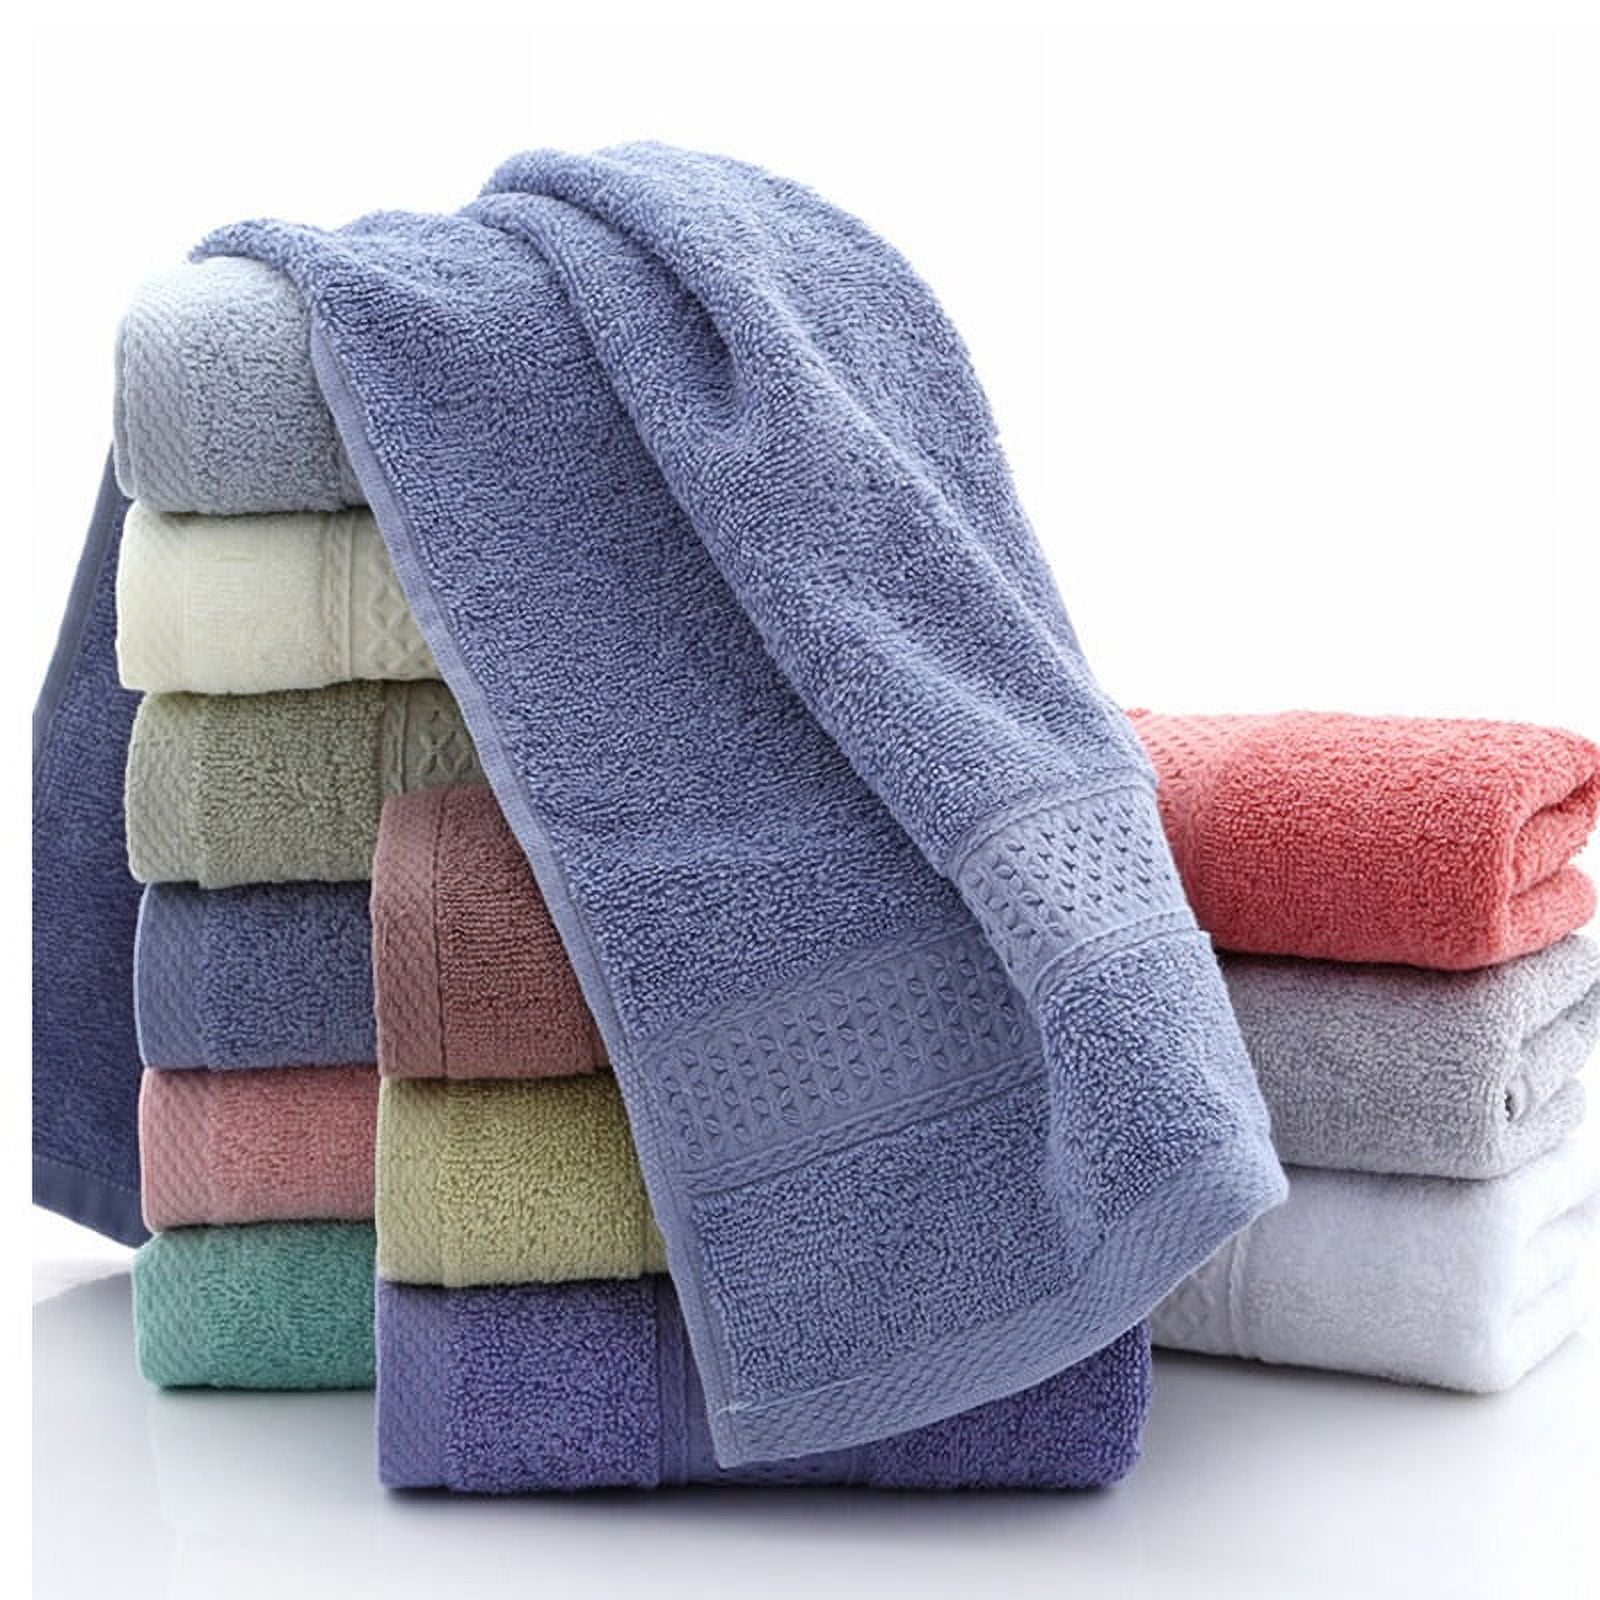 12pcs Waffle Washcloths, Coral Fleece Square Towel, Super Soft Washcloth,  Super Absorbent Face Towel For Home Bathroom, Bathroom Supplies